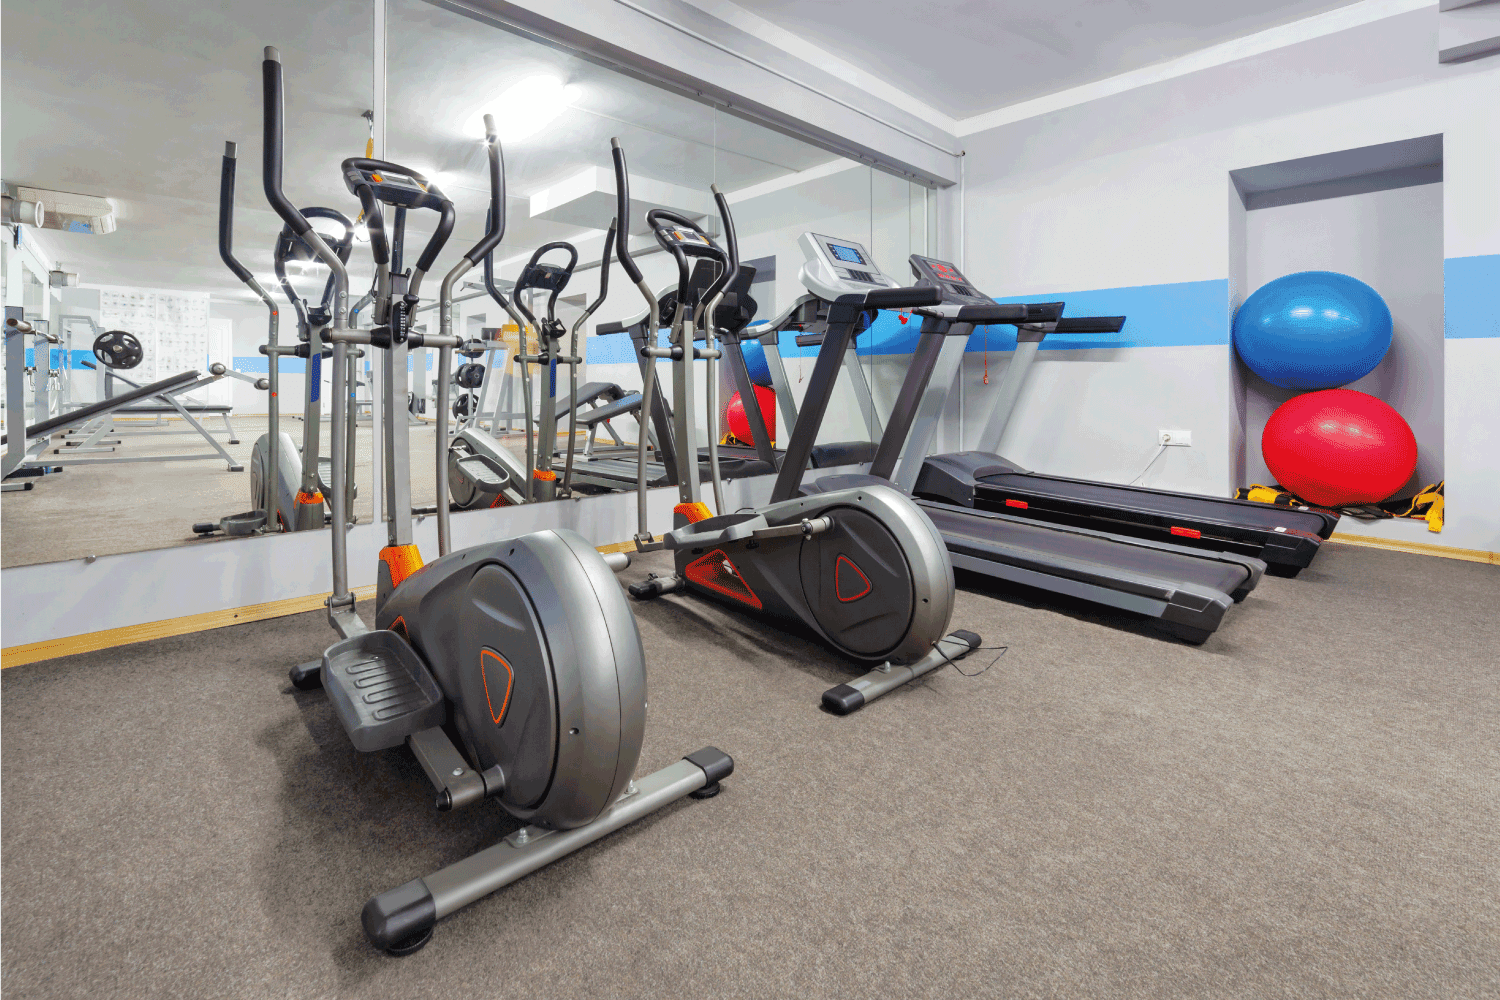 Cardio zone in modern gym. Ellipticals and treadmills.